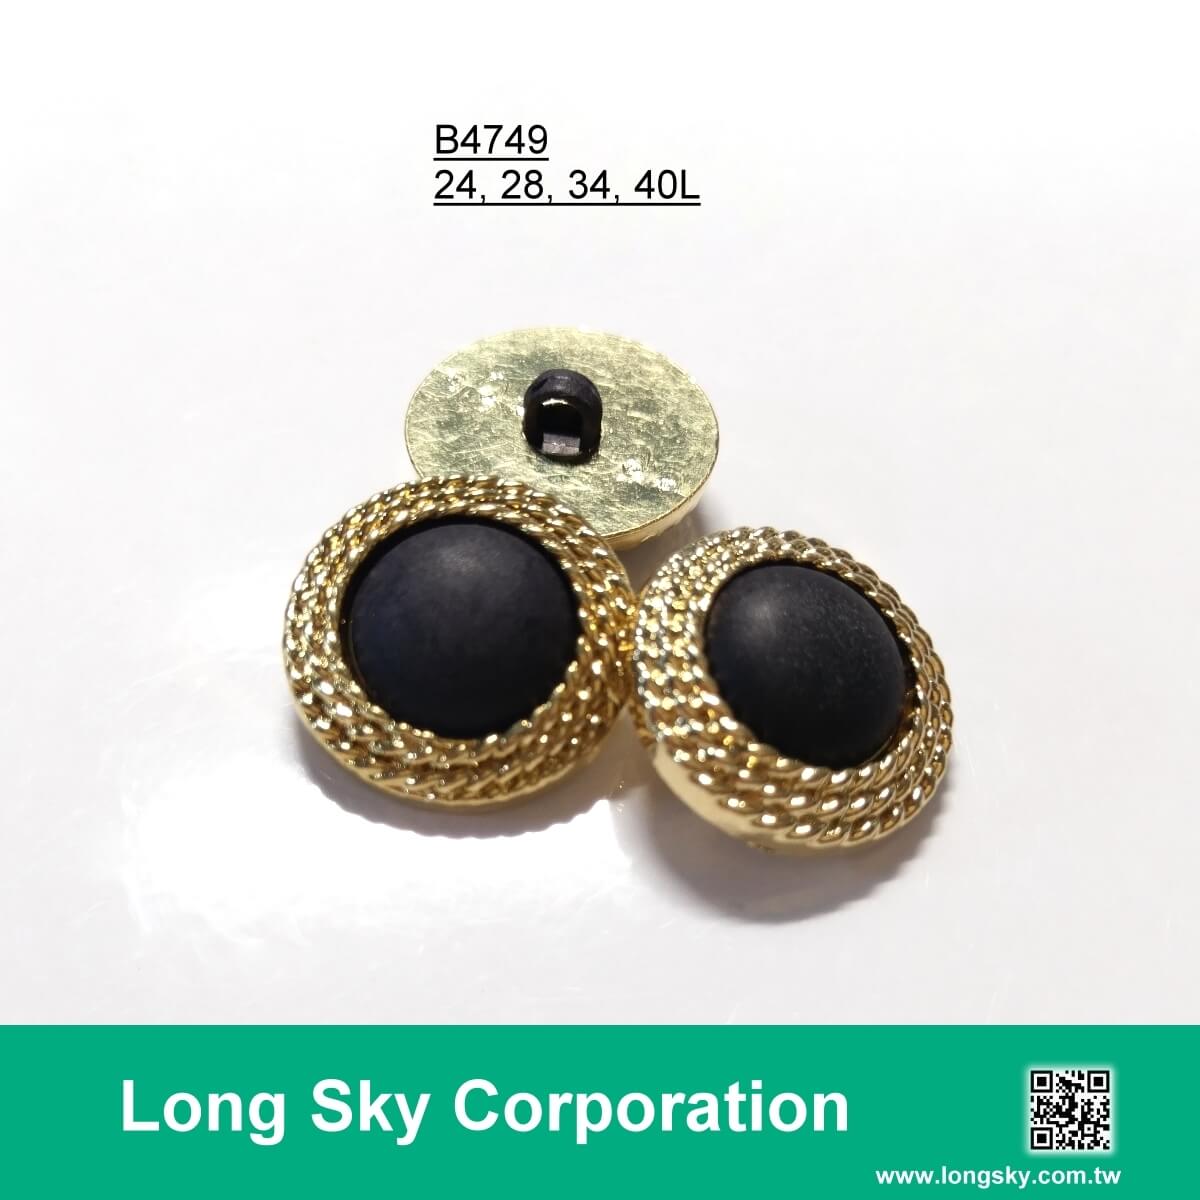 (#B4749/24L,28L,34L,40L) 2-piece combined gold button with nylon black center